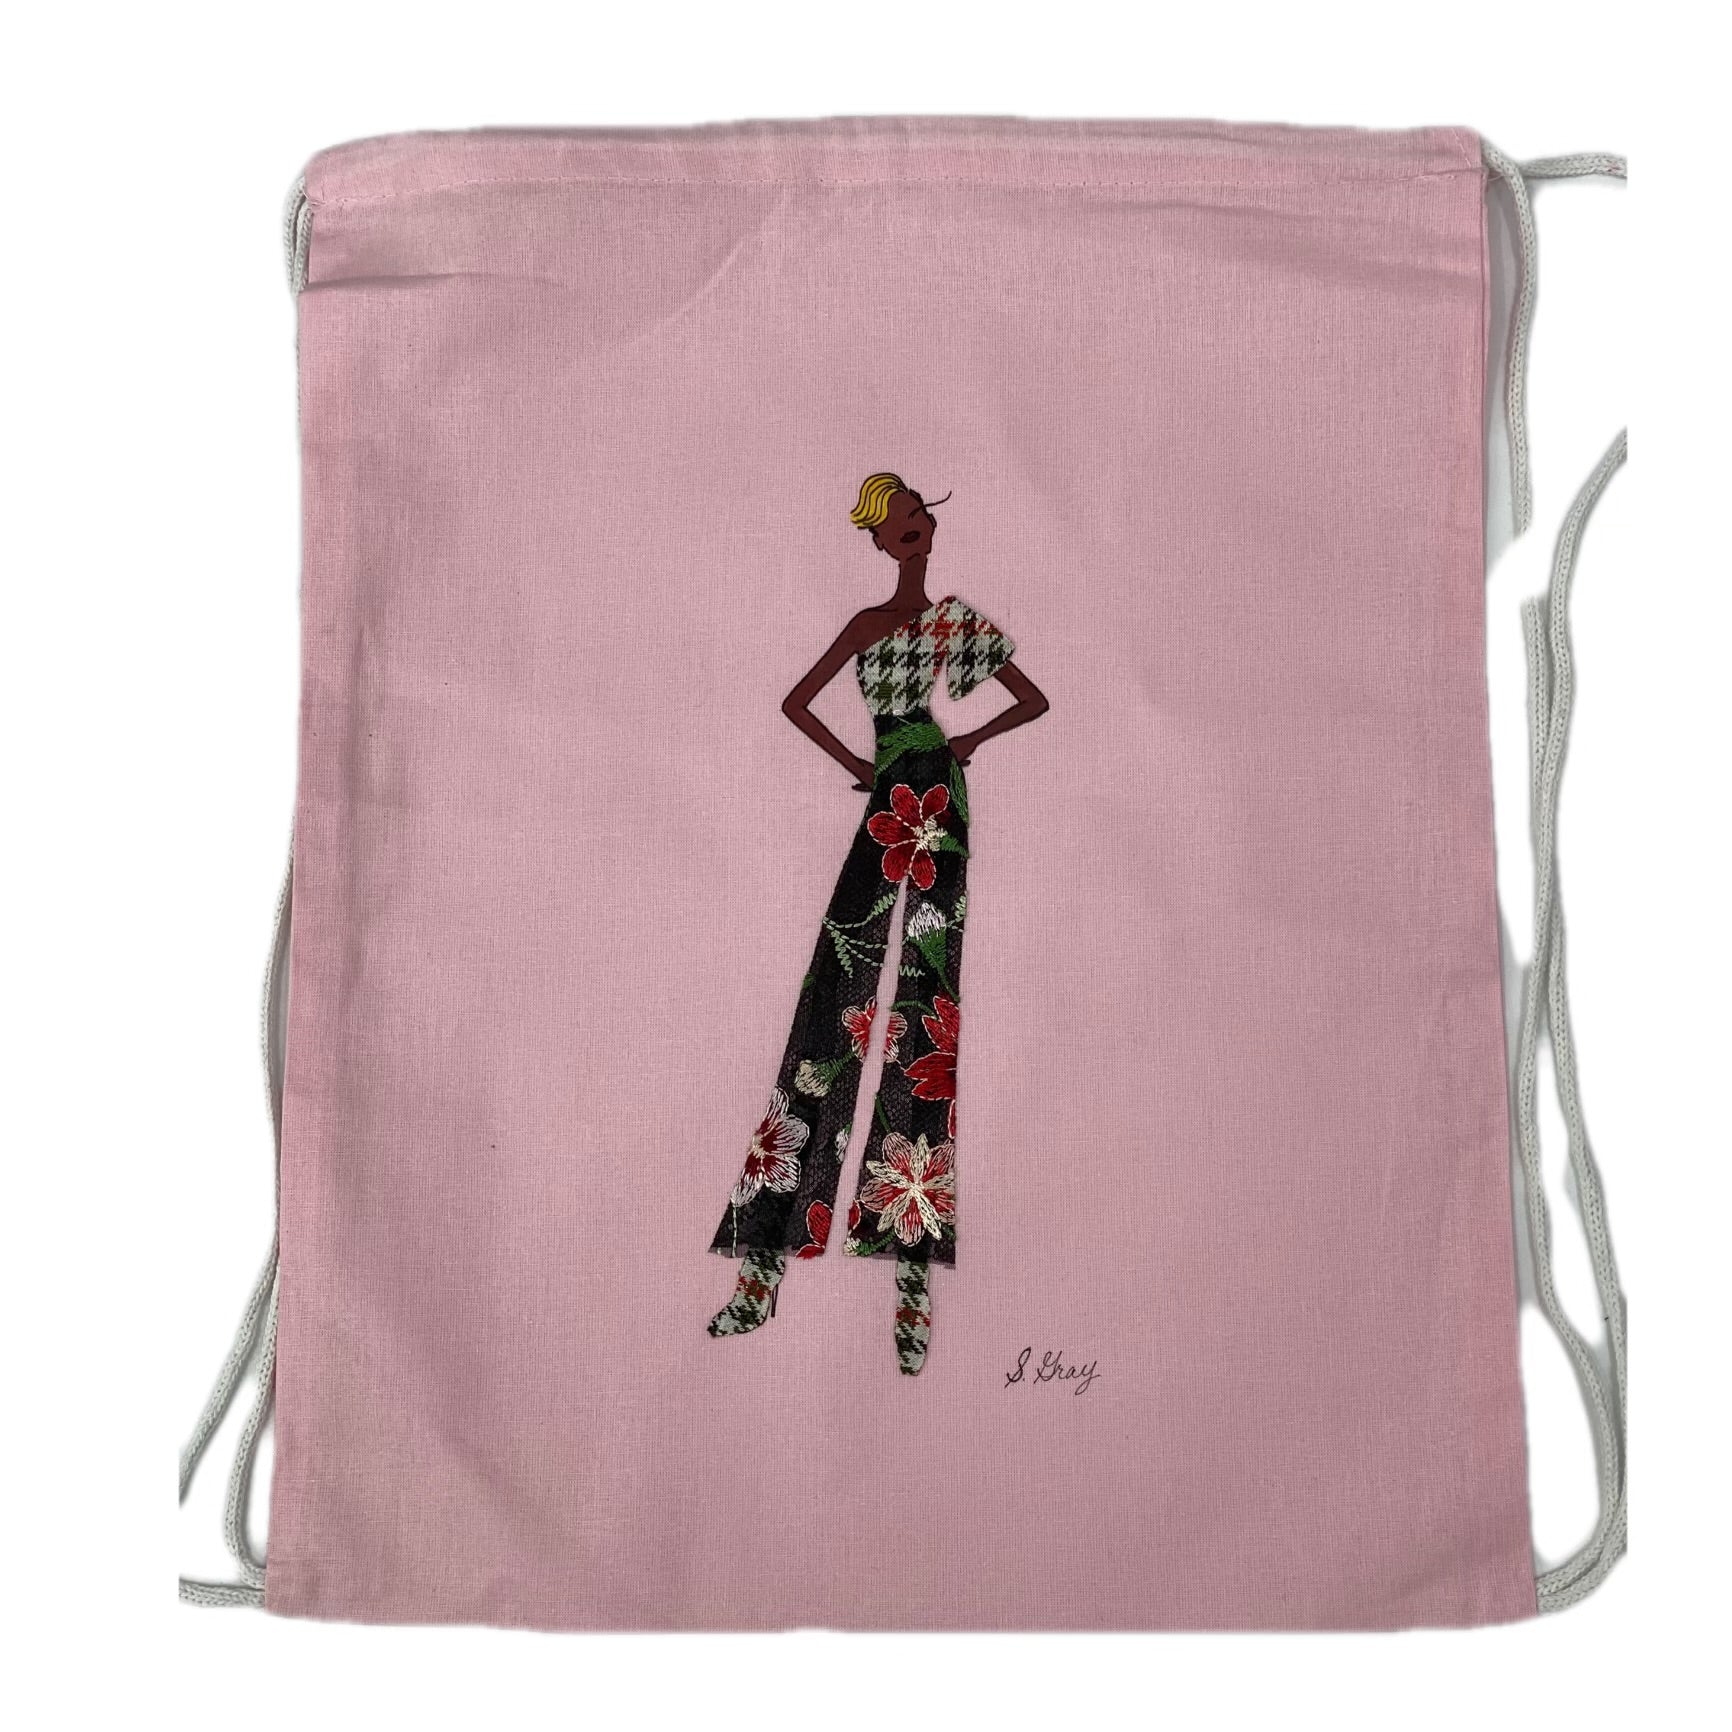 Pink Drawstring back pack bag